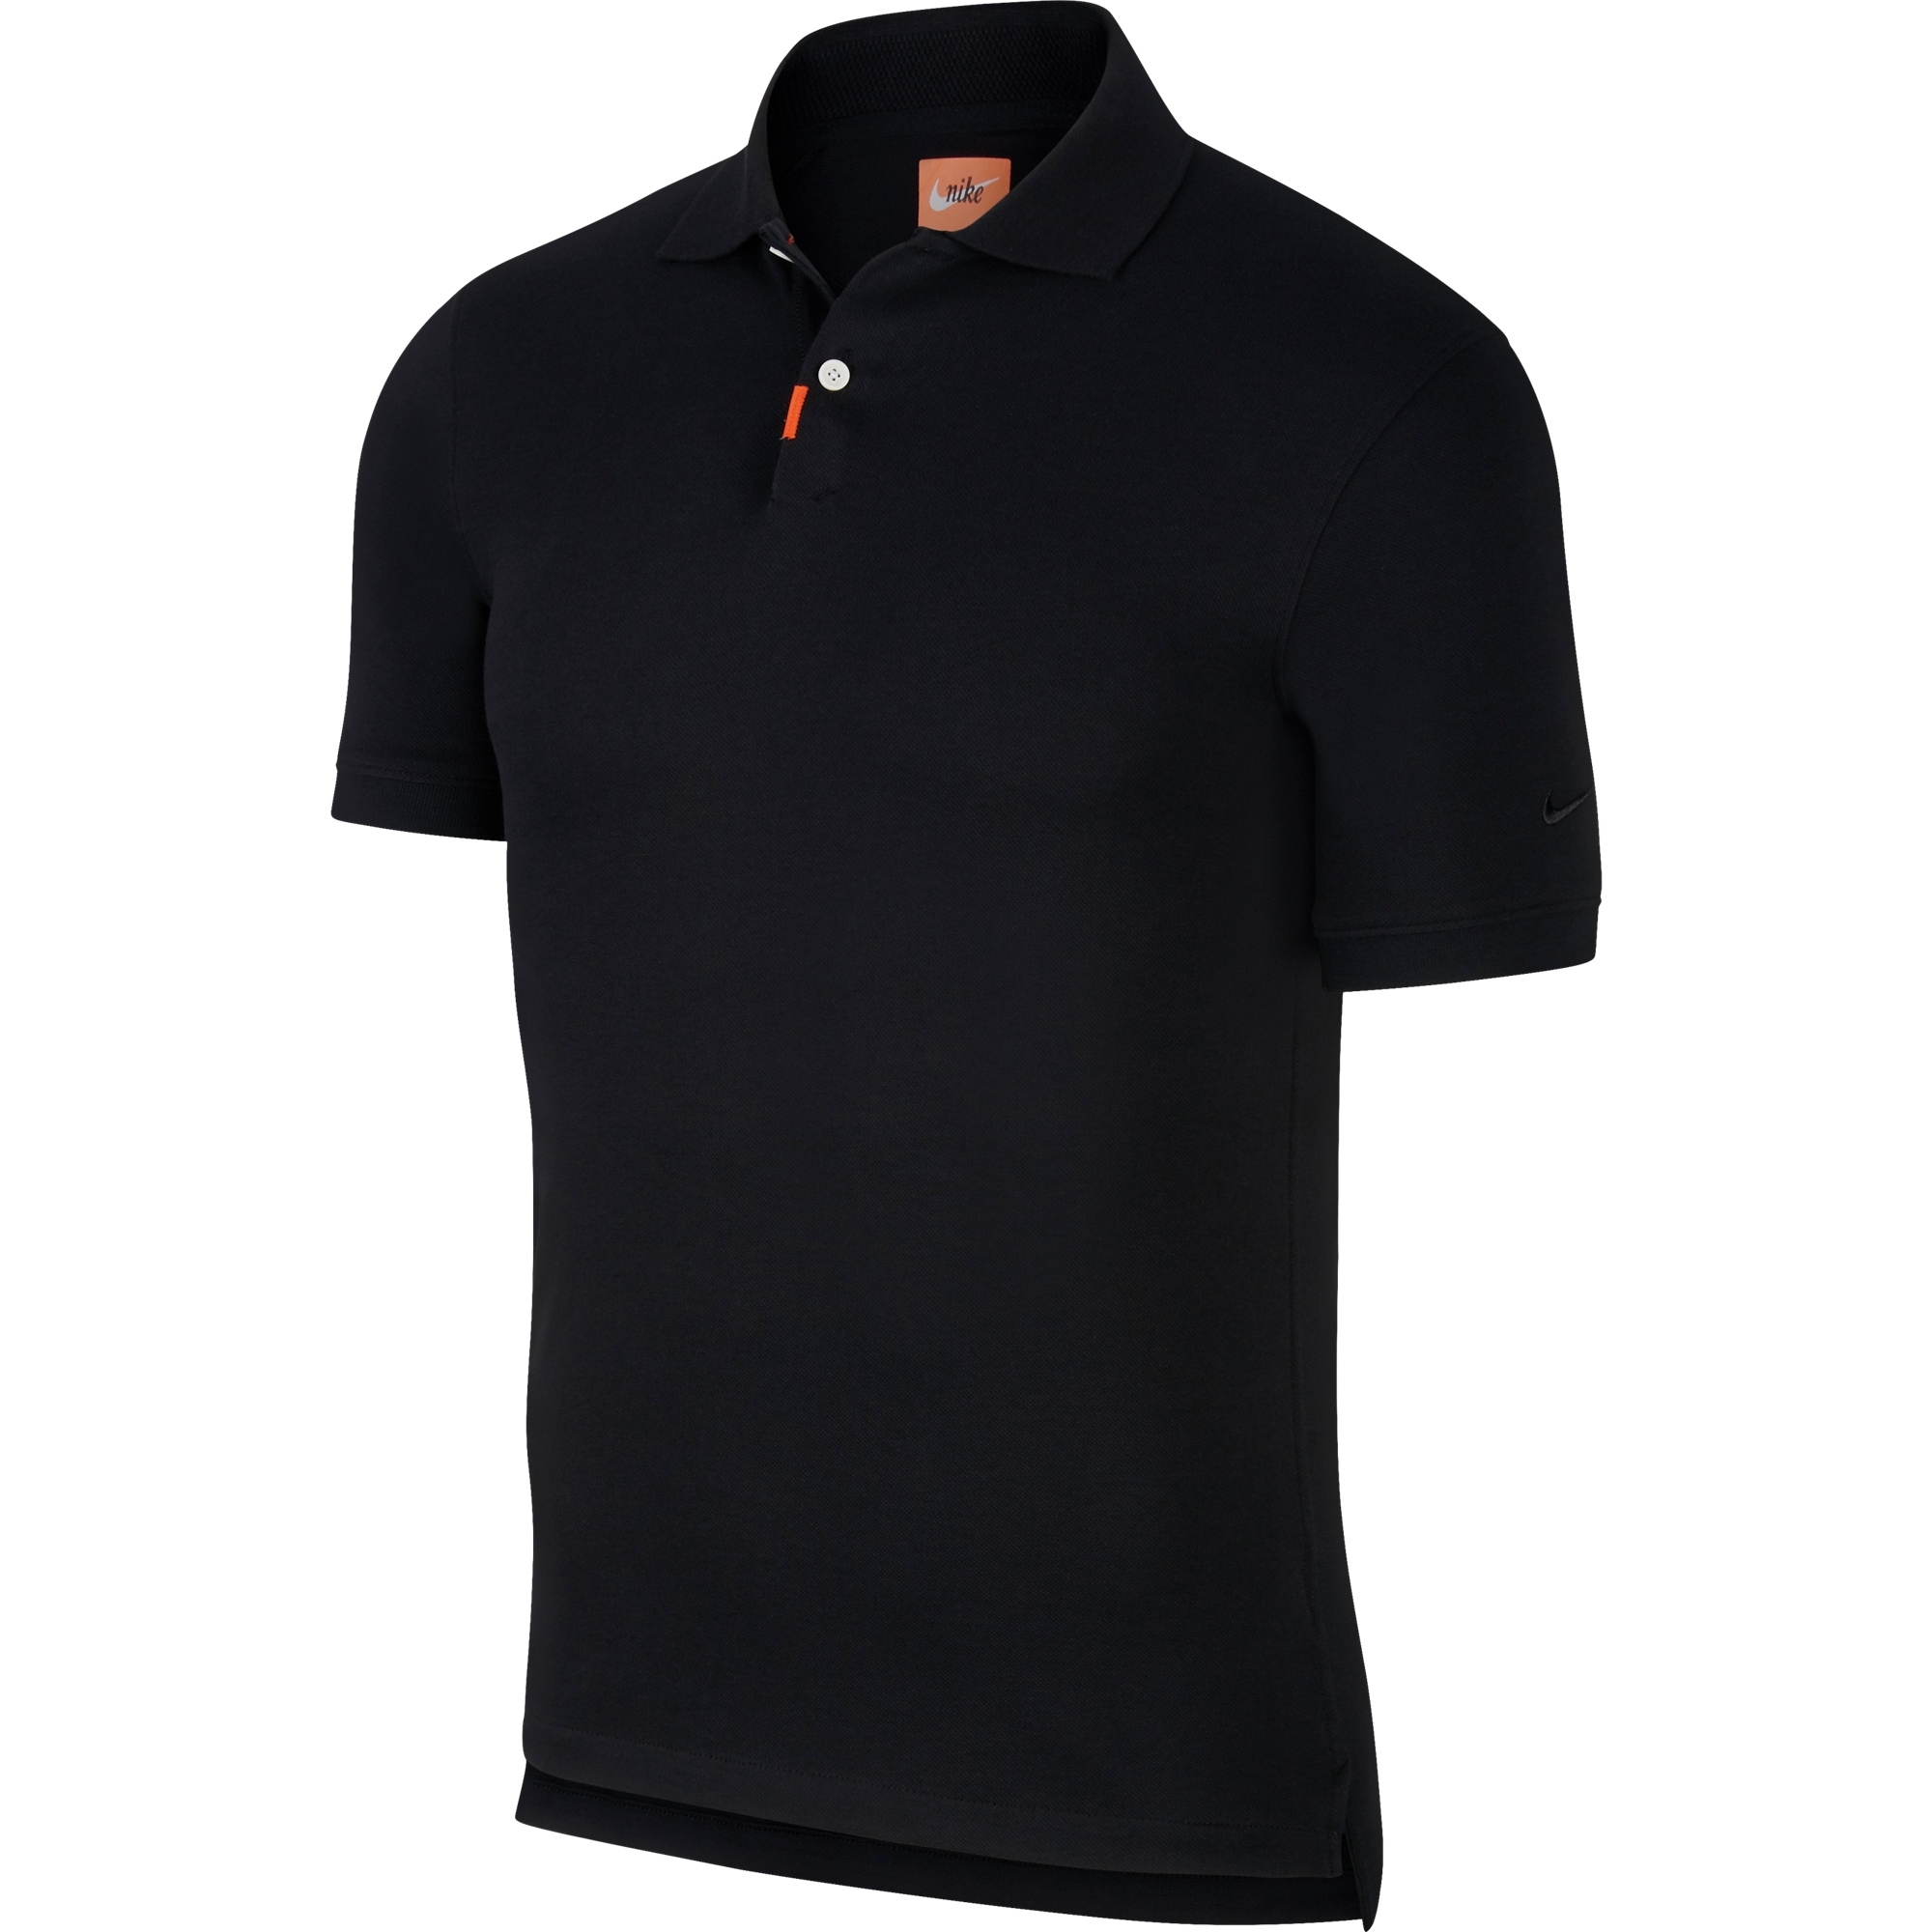 Nike Mens Dri Fit Slim Fit Breathable Golf Polo Shirt Xl- Chest 44-48.5